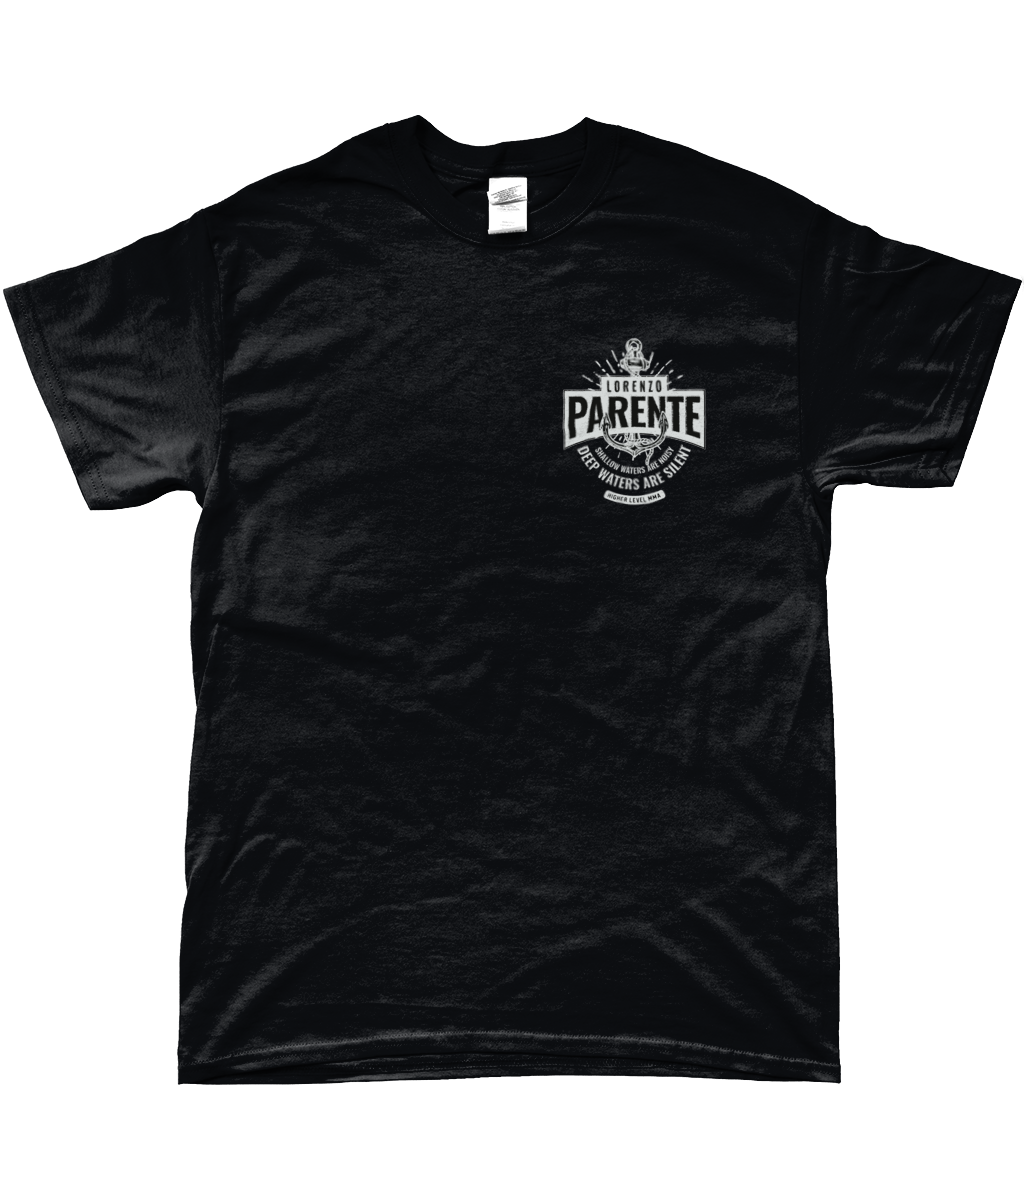 LP Pocket T-Shirt (Black